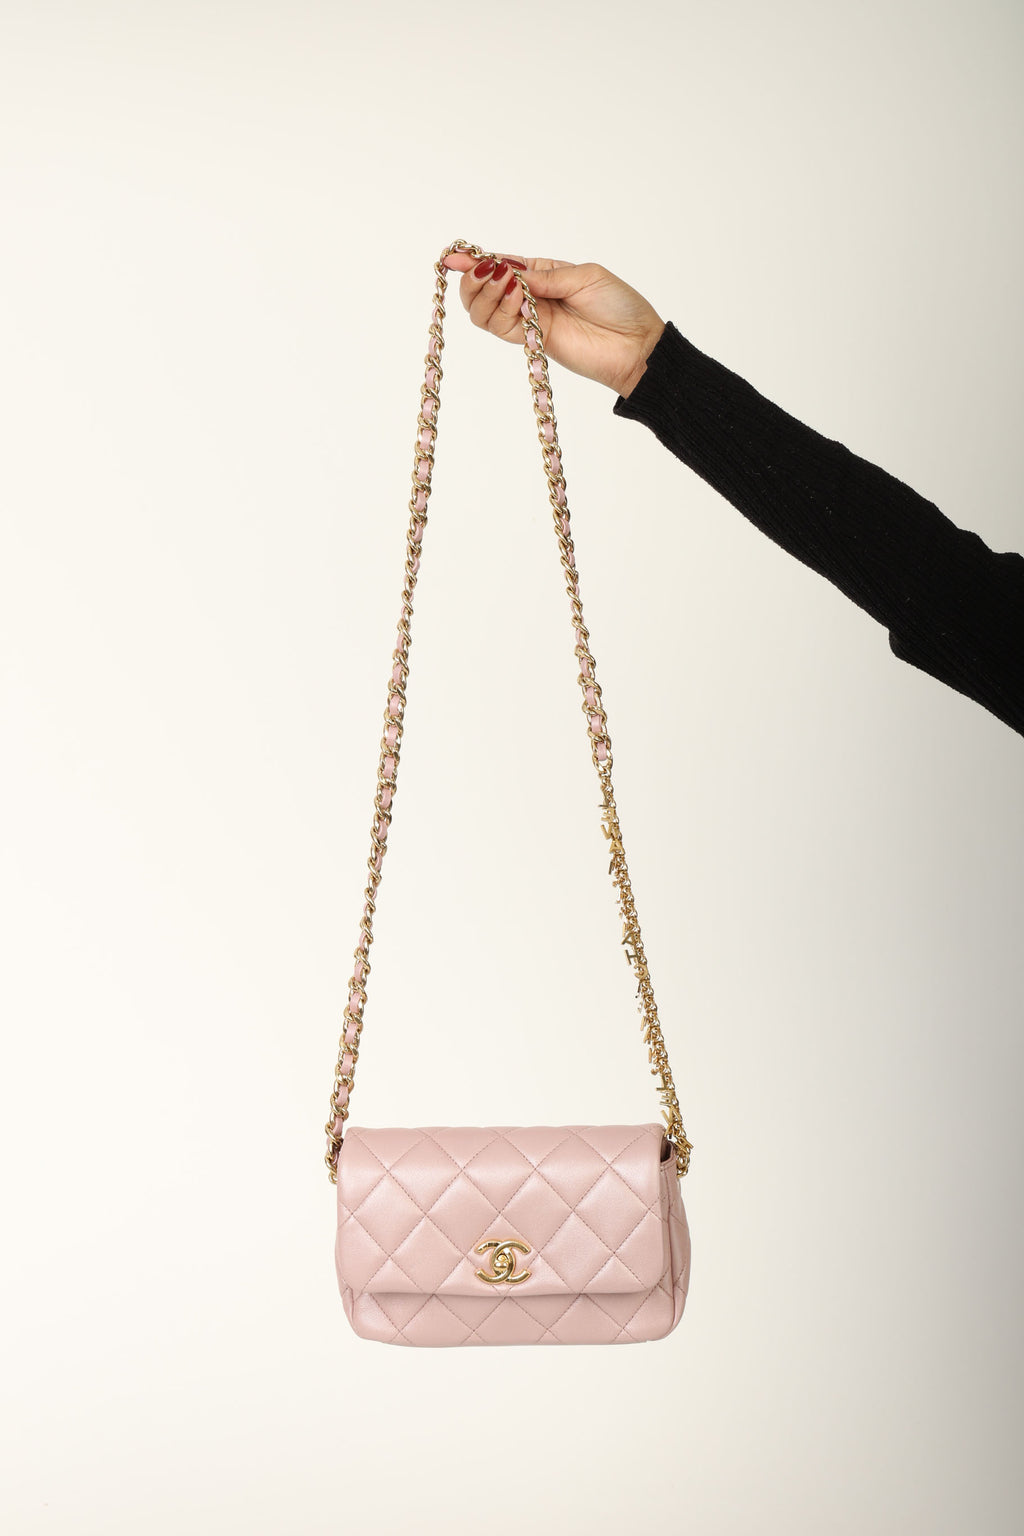 Chanel 24C Iridescent Lambskin Charm Flap Bag